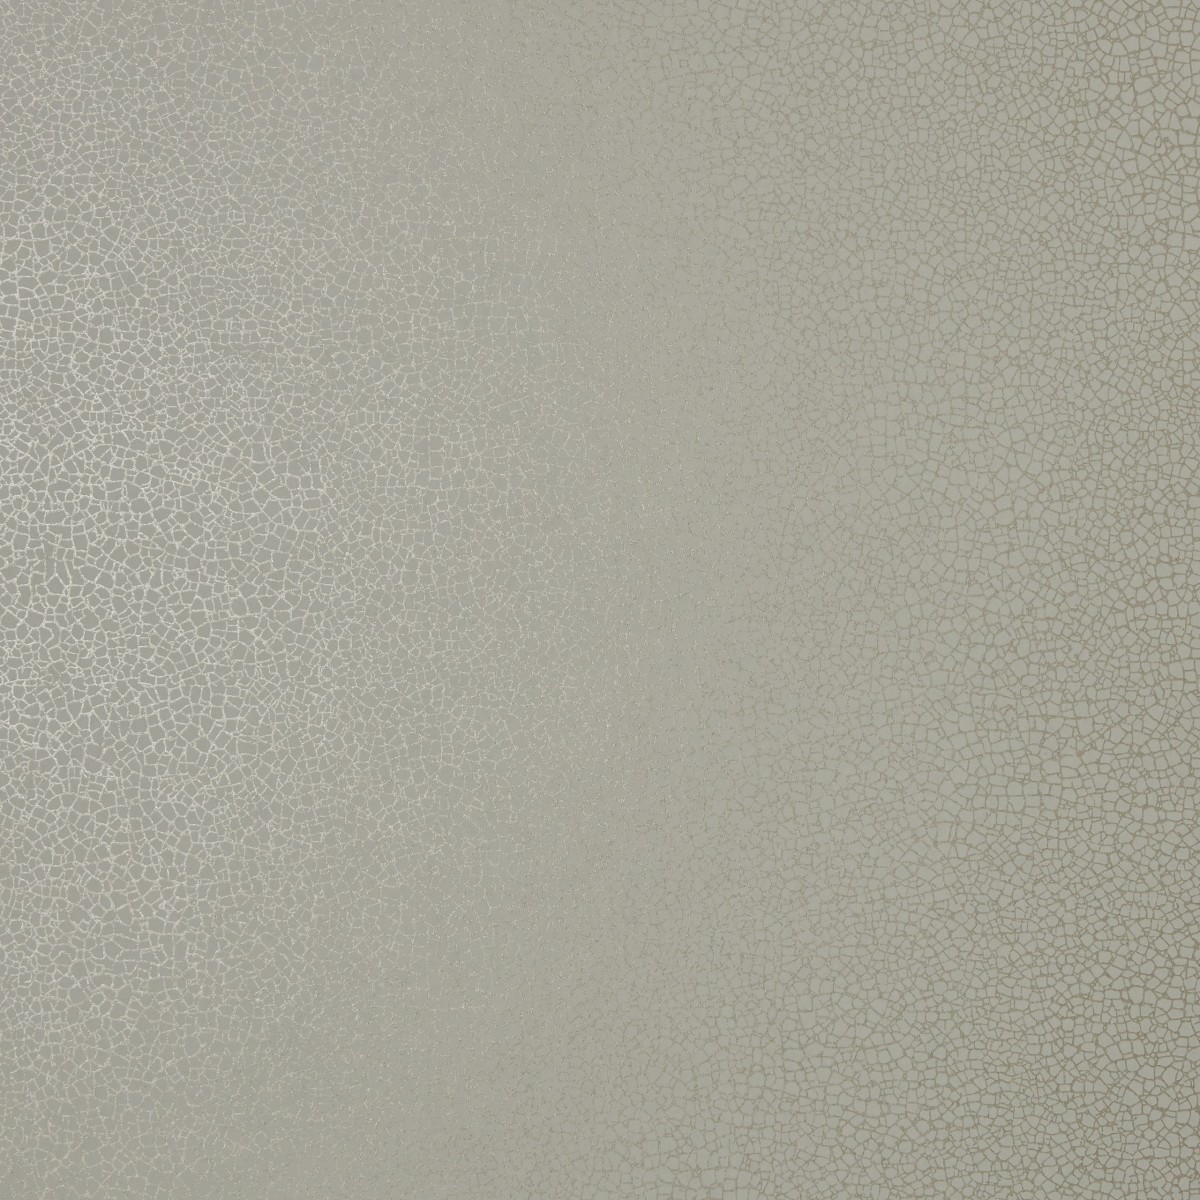 Tapet Emile, Sand Neutral Luxury Crackle, 1838 Wallcoverings, 5.3mp / rola, Tapet living 